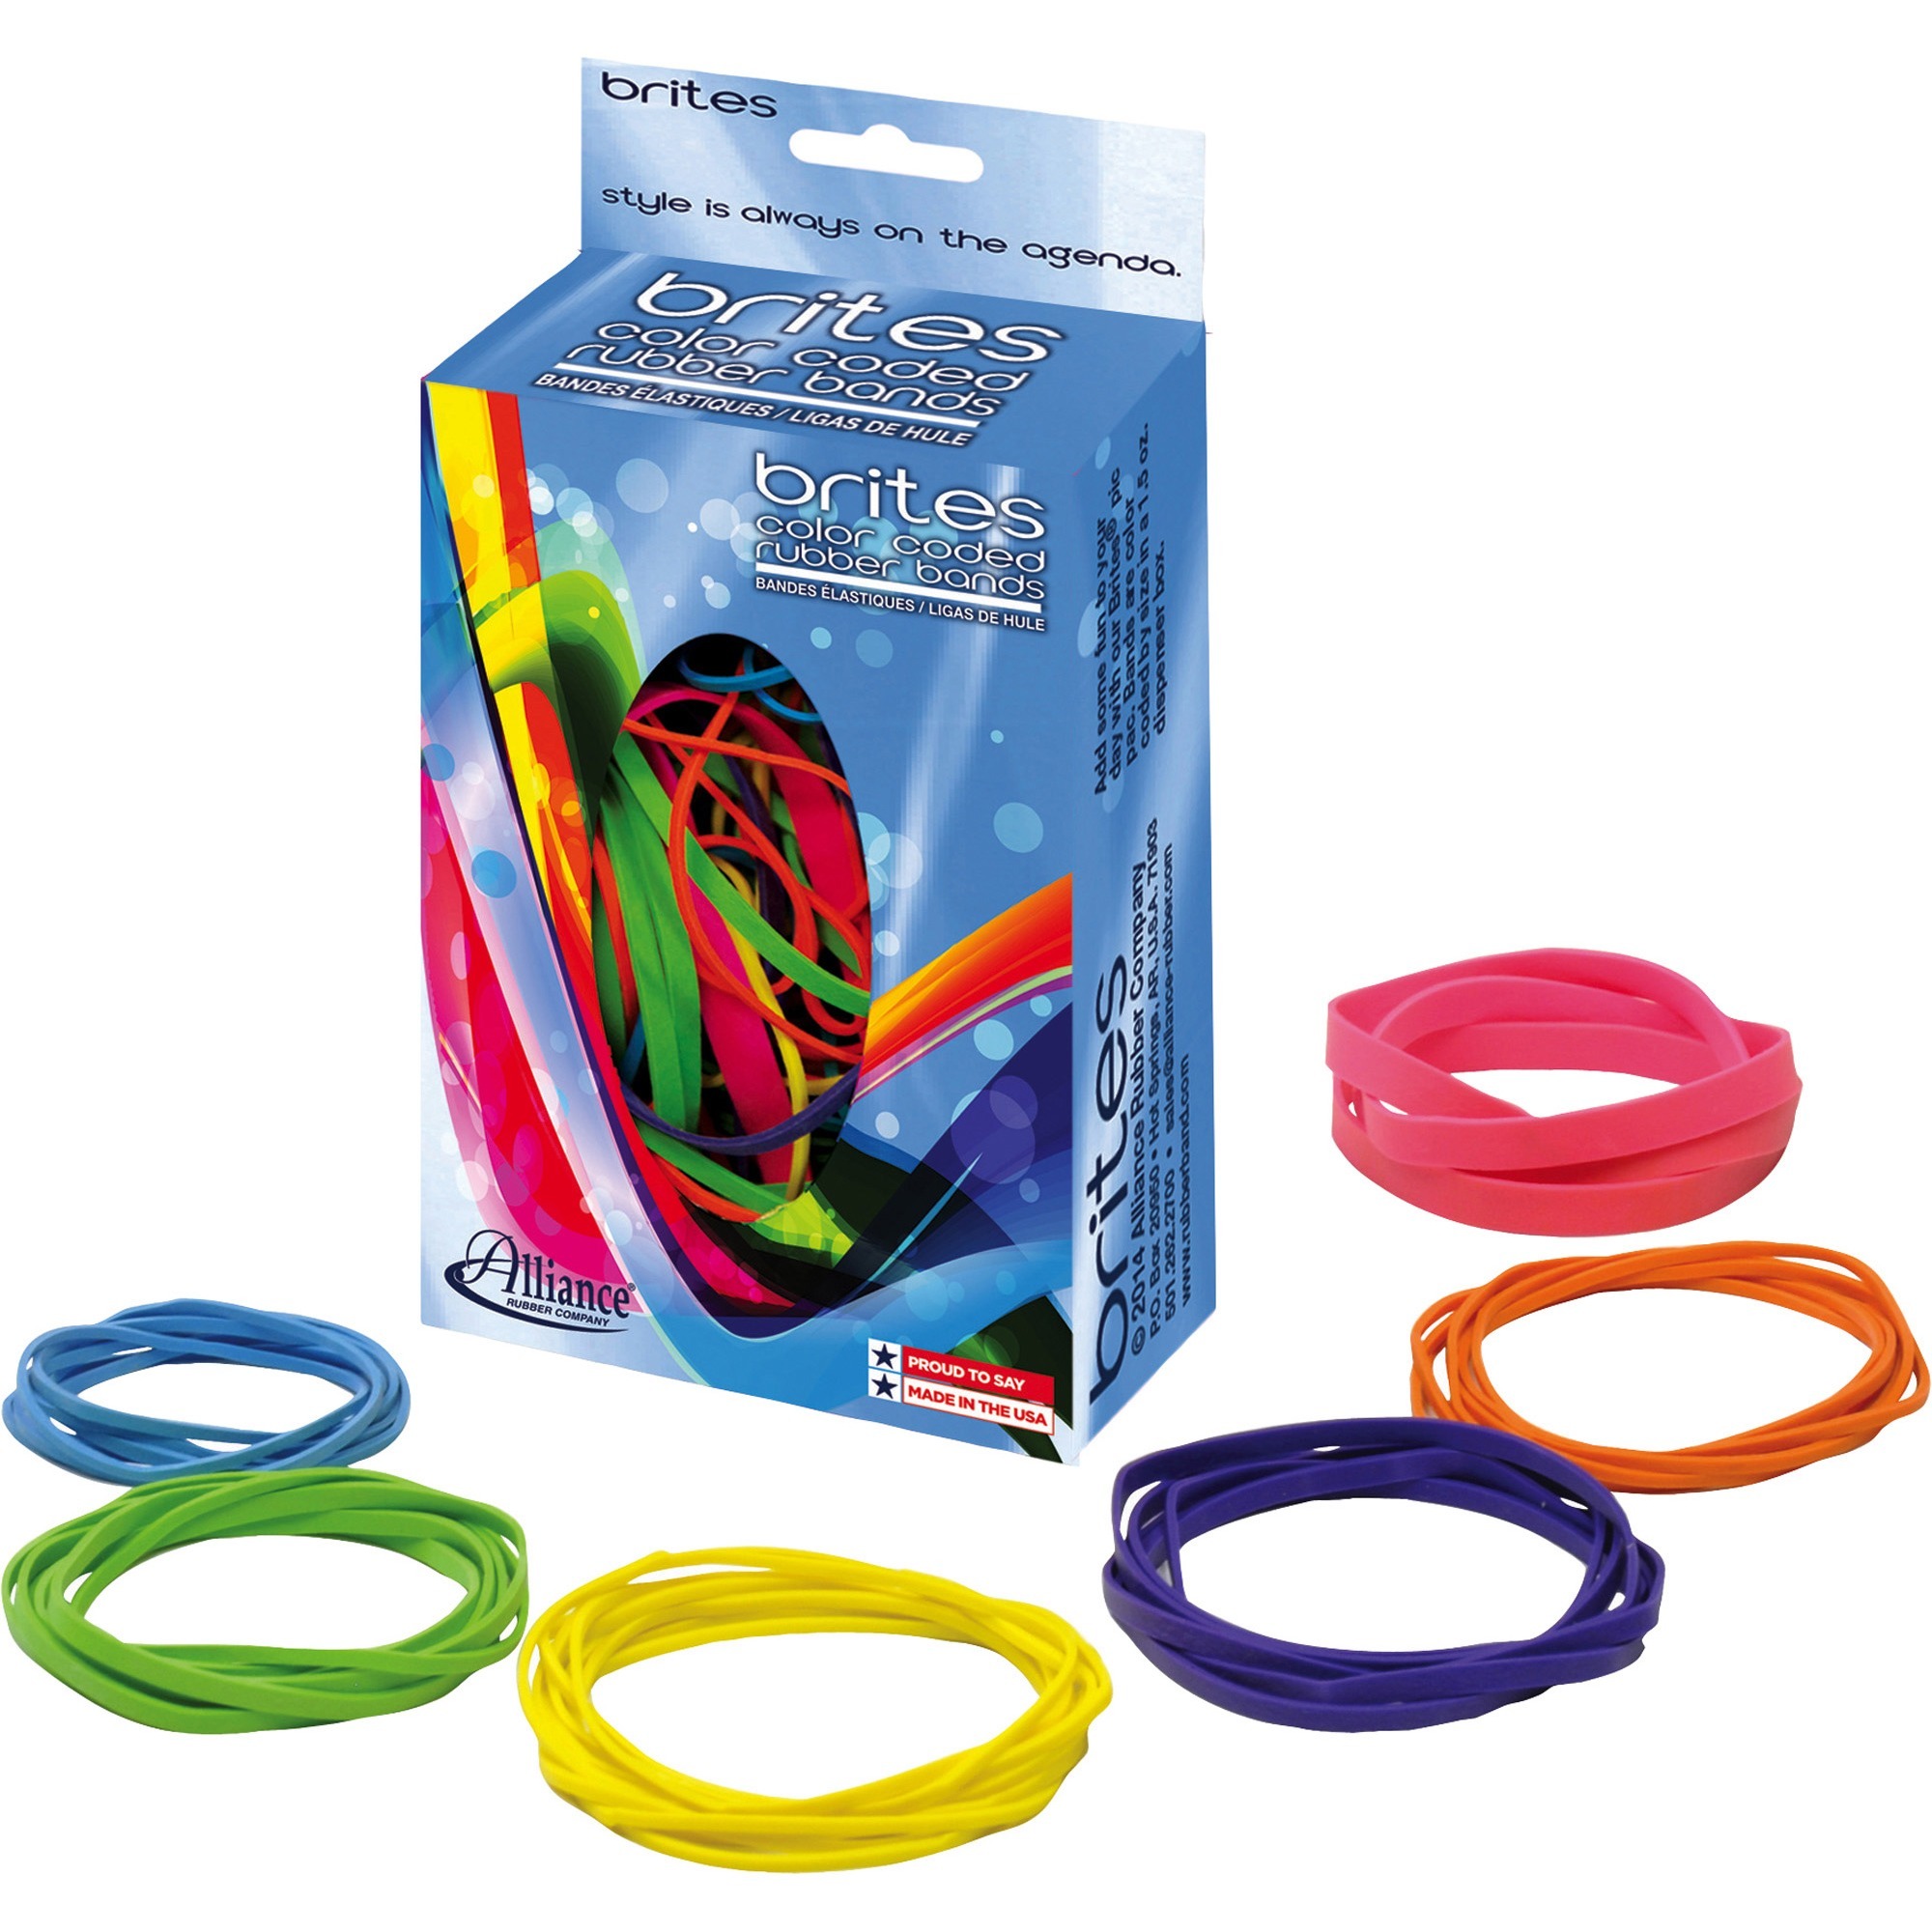 Standard® coloured rubber bands